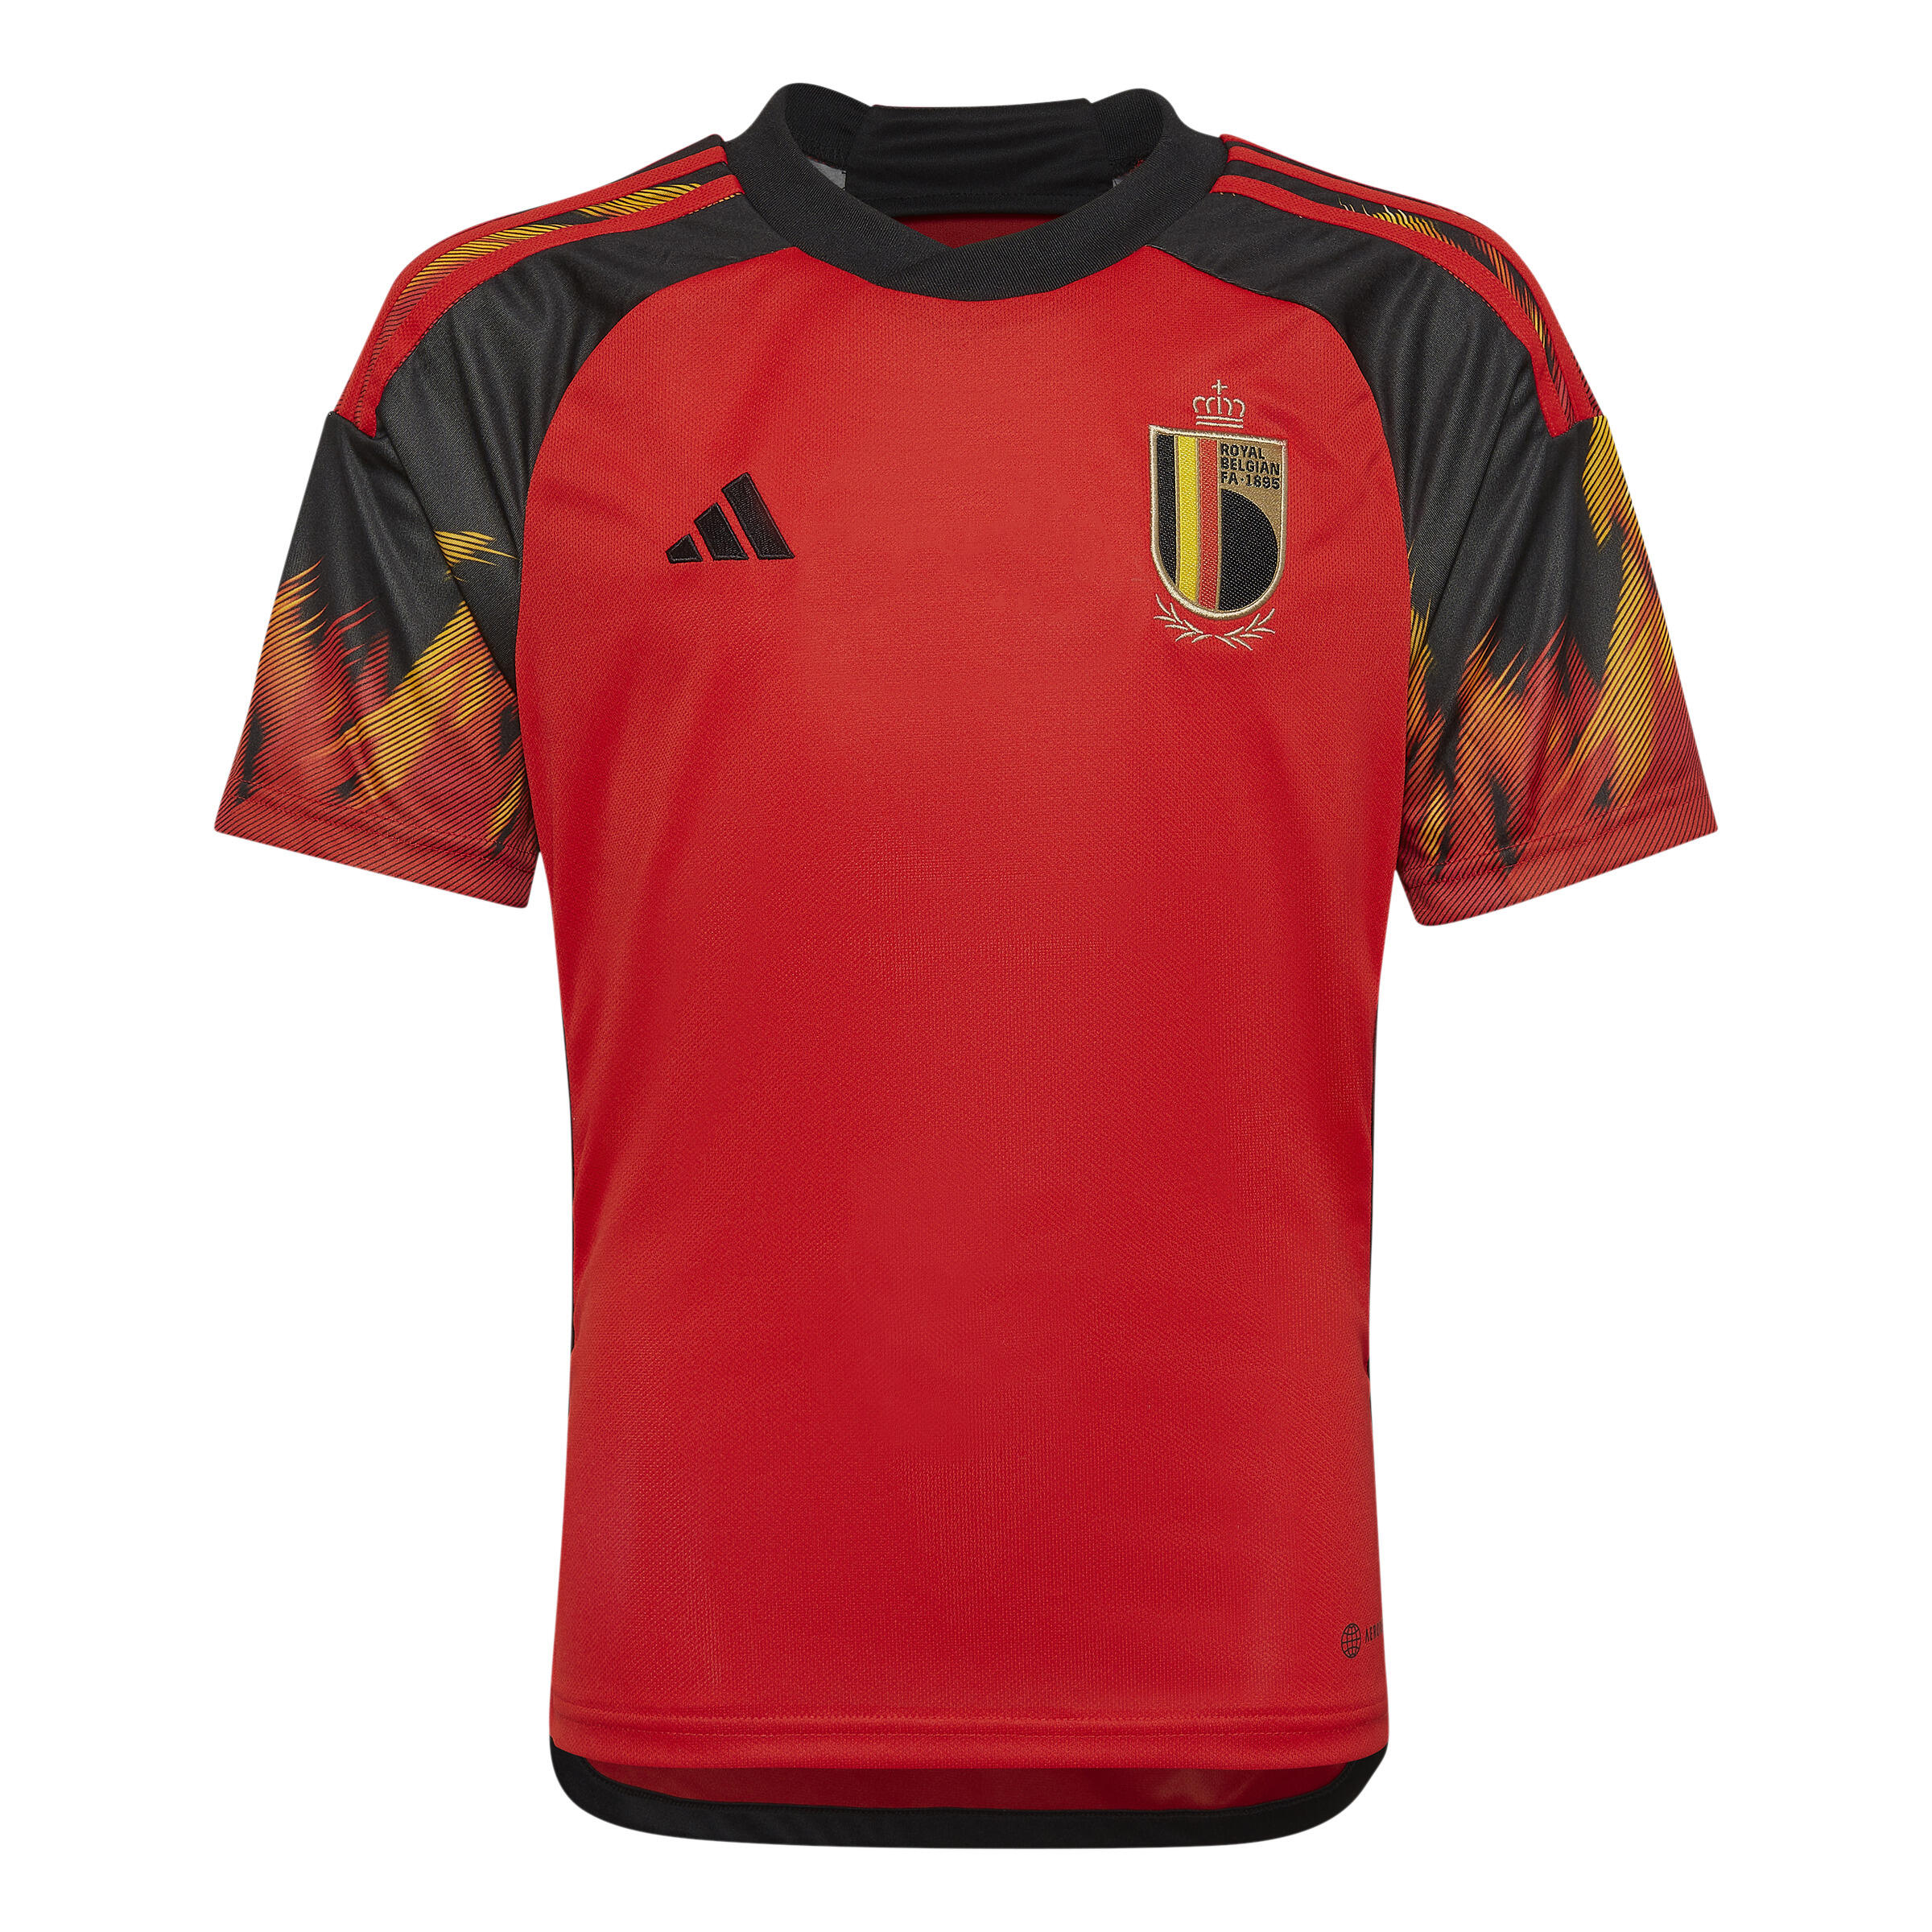 Tricou Fotbal Teren propriu Replică Belgia 22 Roșu-Negru Copii La Oferta Online ADIDAS imagine La Oferta Online